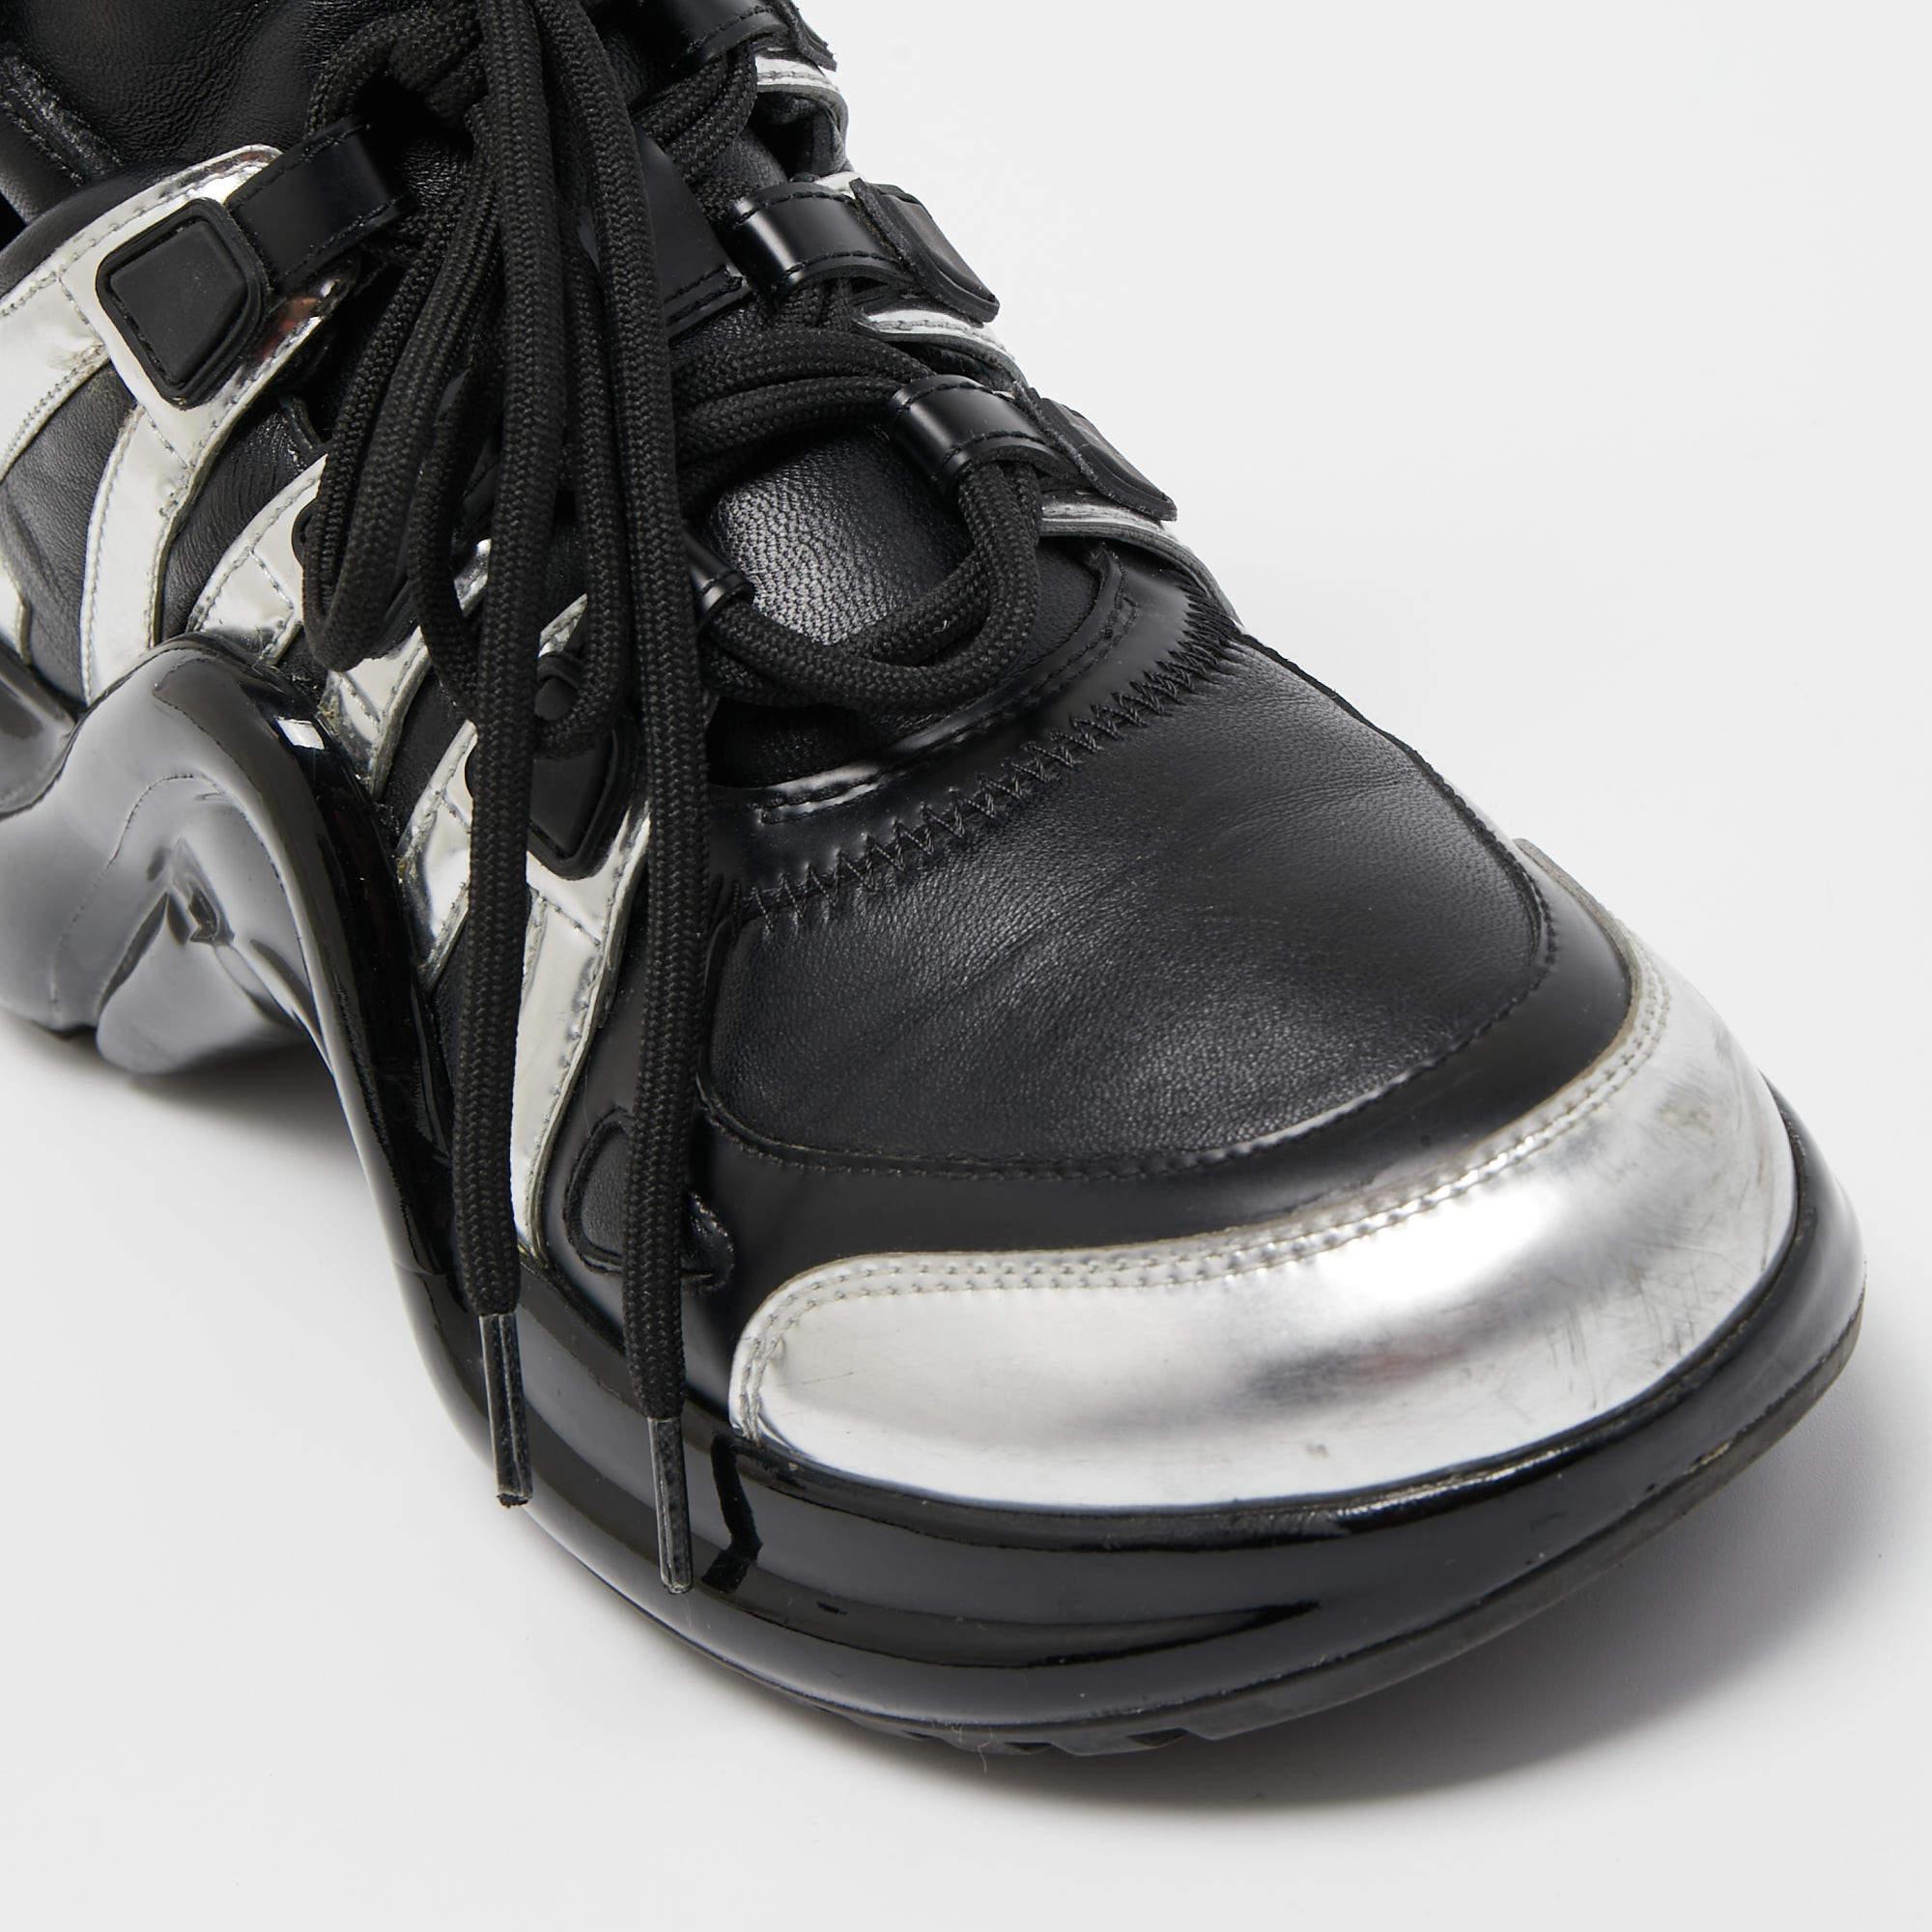 Louis Vuitton Black/Silver Leather Archlight Sneakers Size 38 In Good Condition For Sale In Dubai, Al Qouz 2